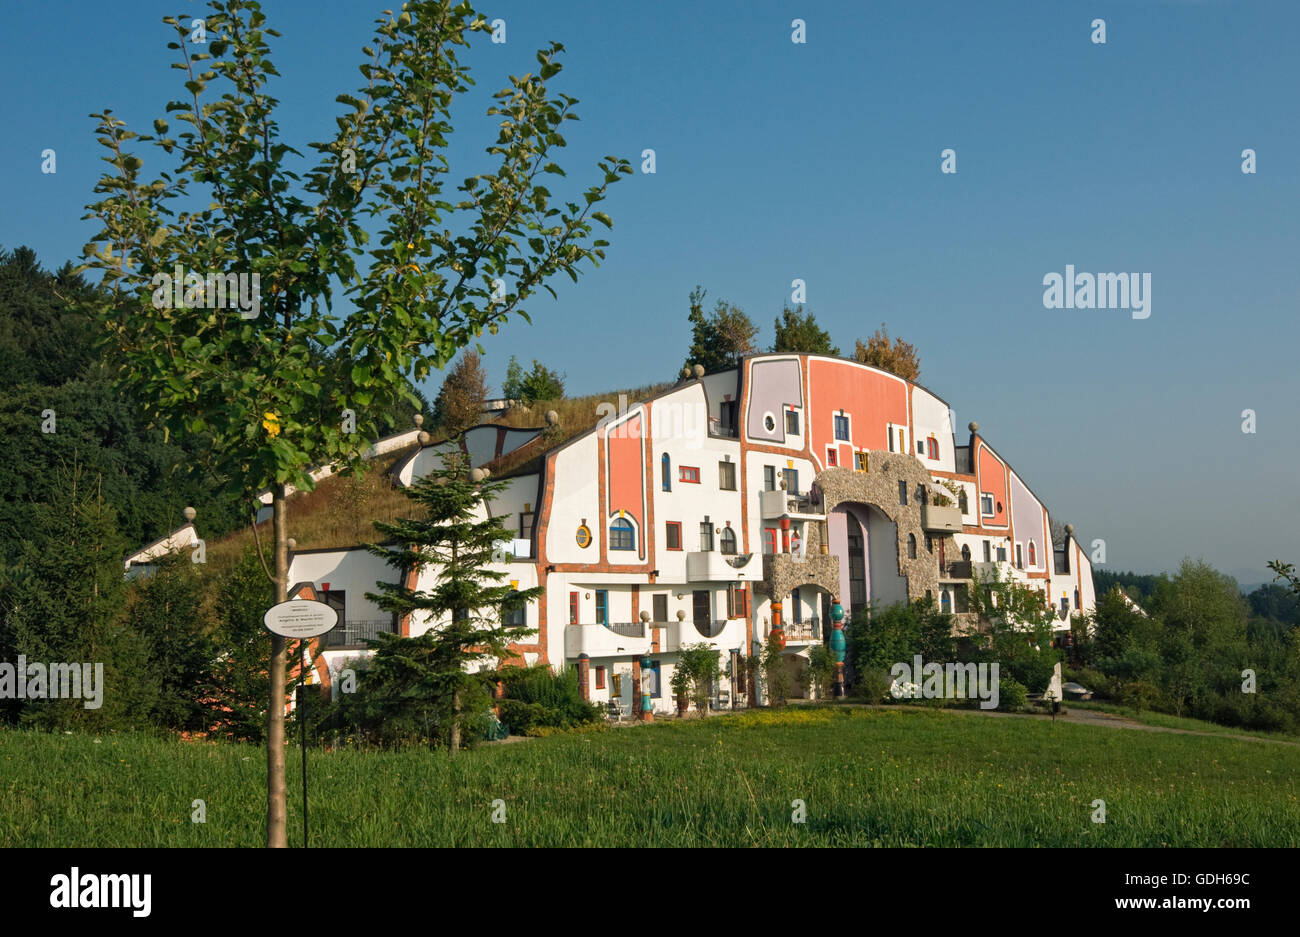 Steinhaus, Stone House of the Rogner Bad Blumau hotel complex, designed by architect Friedensreich Hundertwasser Stock Photo